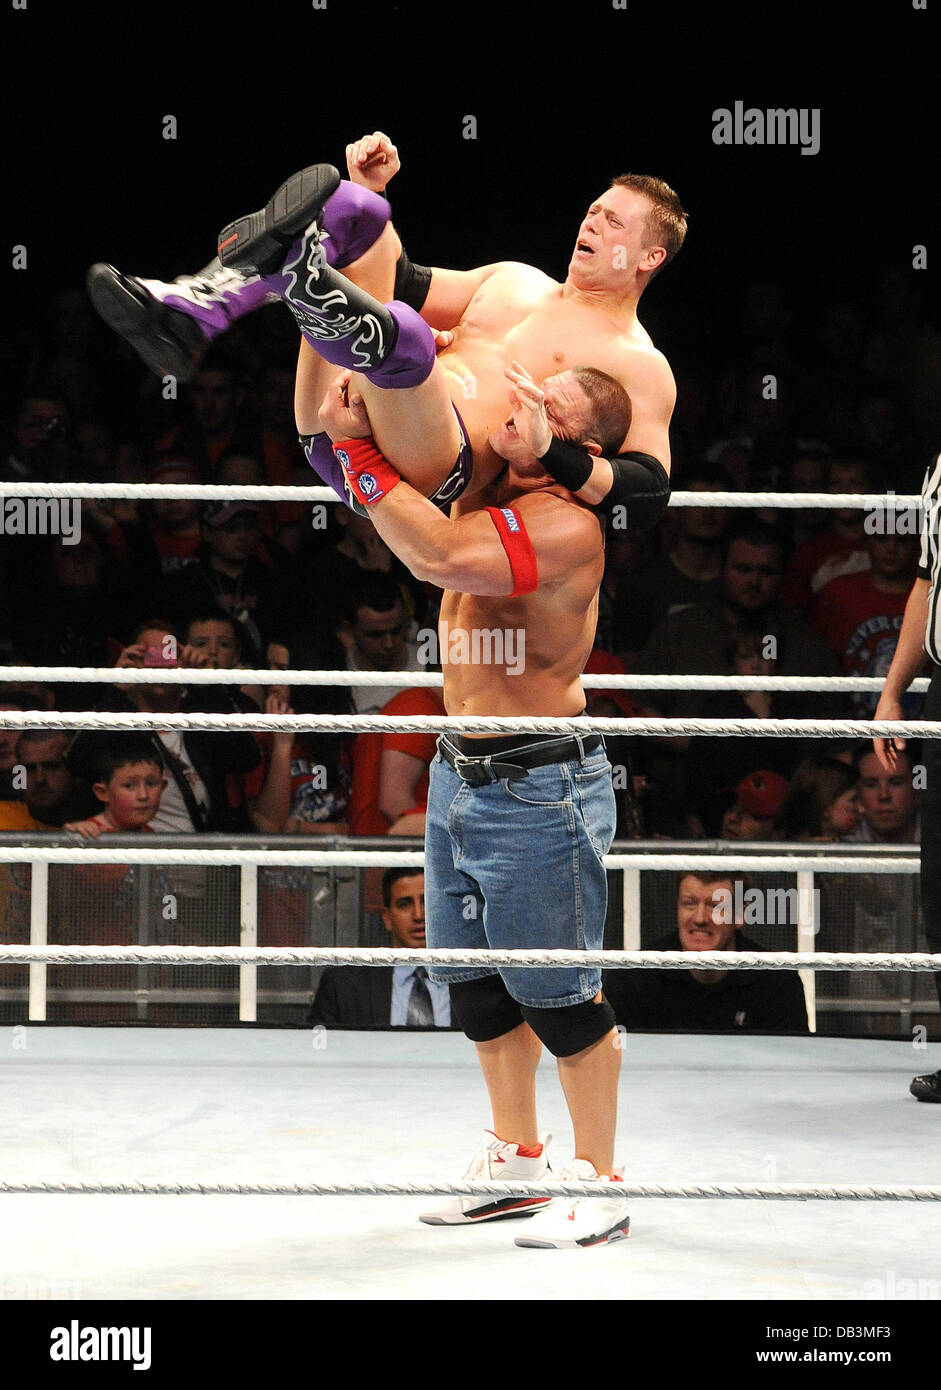 John Cena and The Miz WWE RAW Wrestling Superstars at The O2 Arena Dublin, Ireland - 15.04.11 Stock Photo